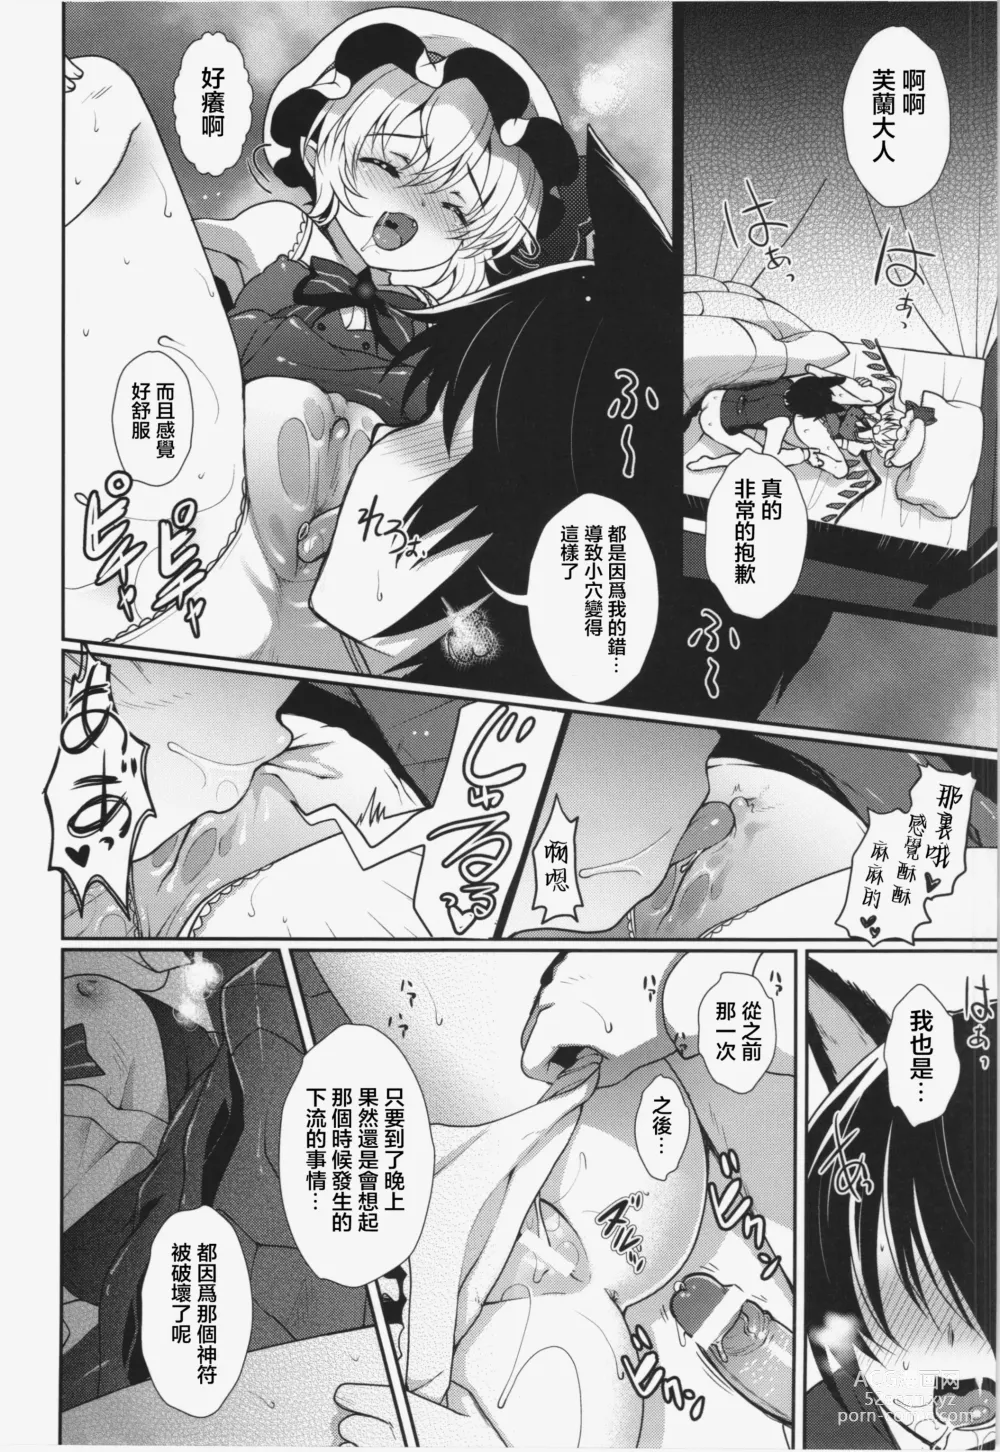 Page 16 of doujinshi concern